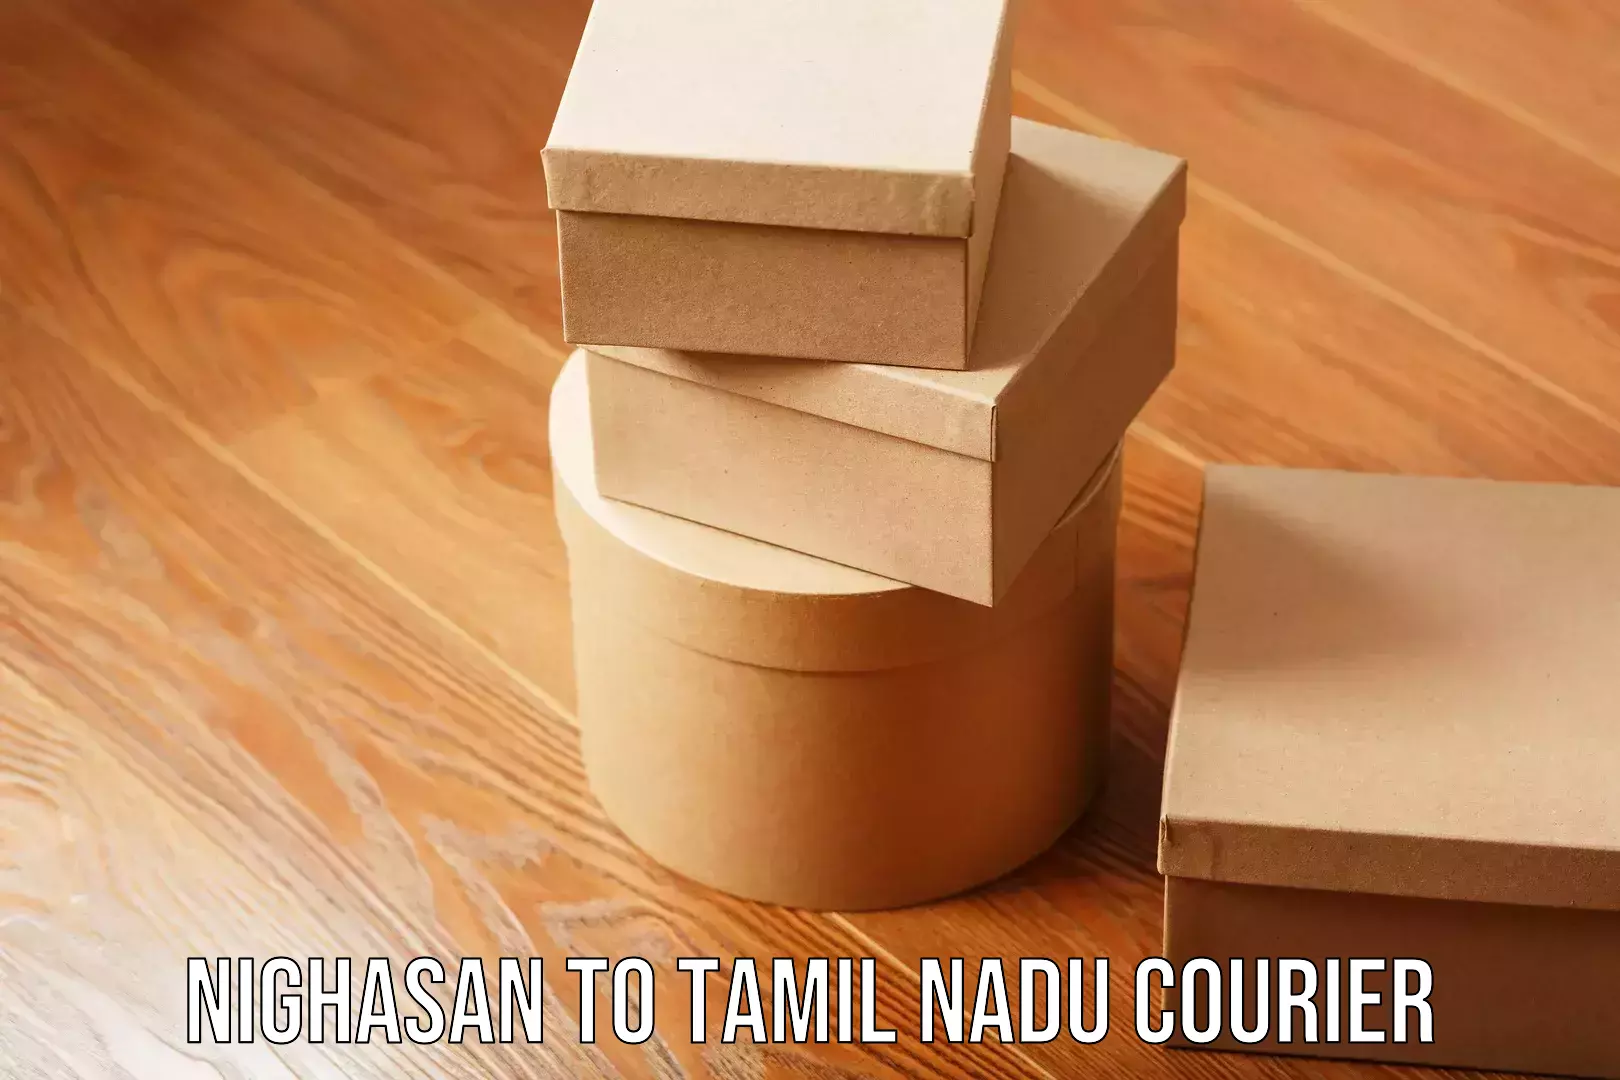 Efficient moving and packing Nighasan to Tamil Nadu